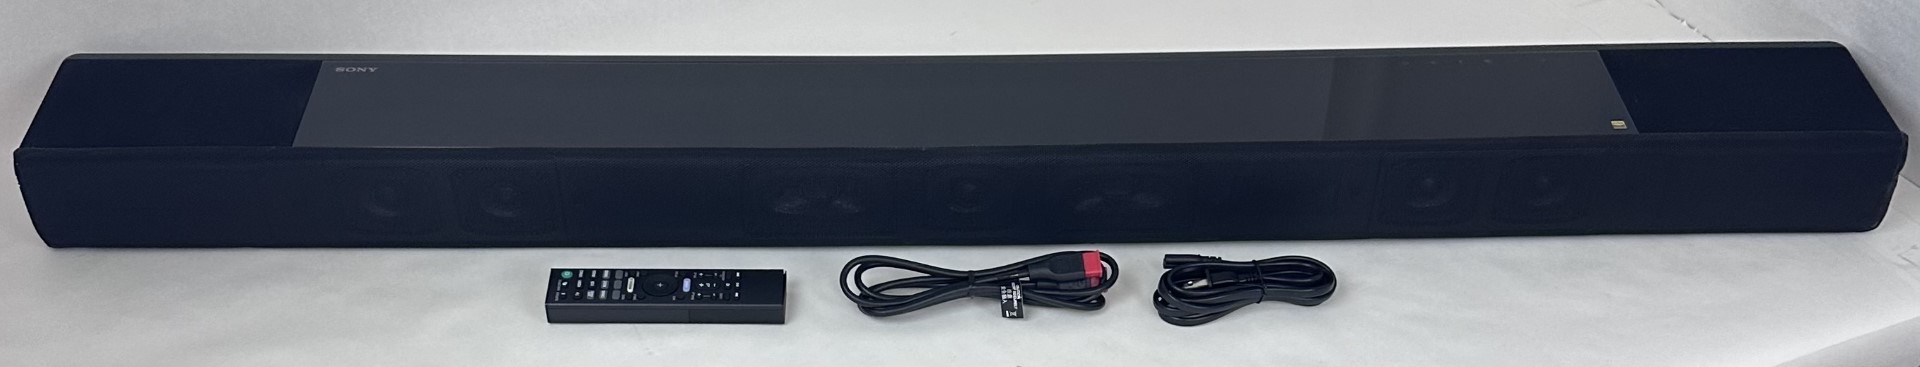 Sony HT-A7000 7.1.2 Channel Soundbar with Dolby Atmos - 6822 U